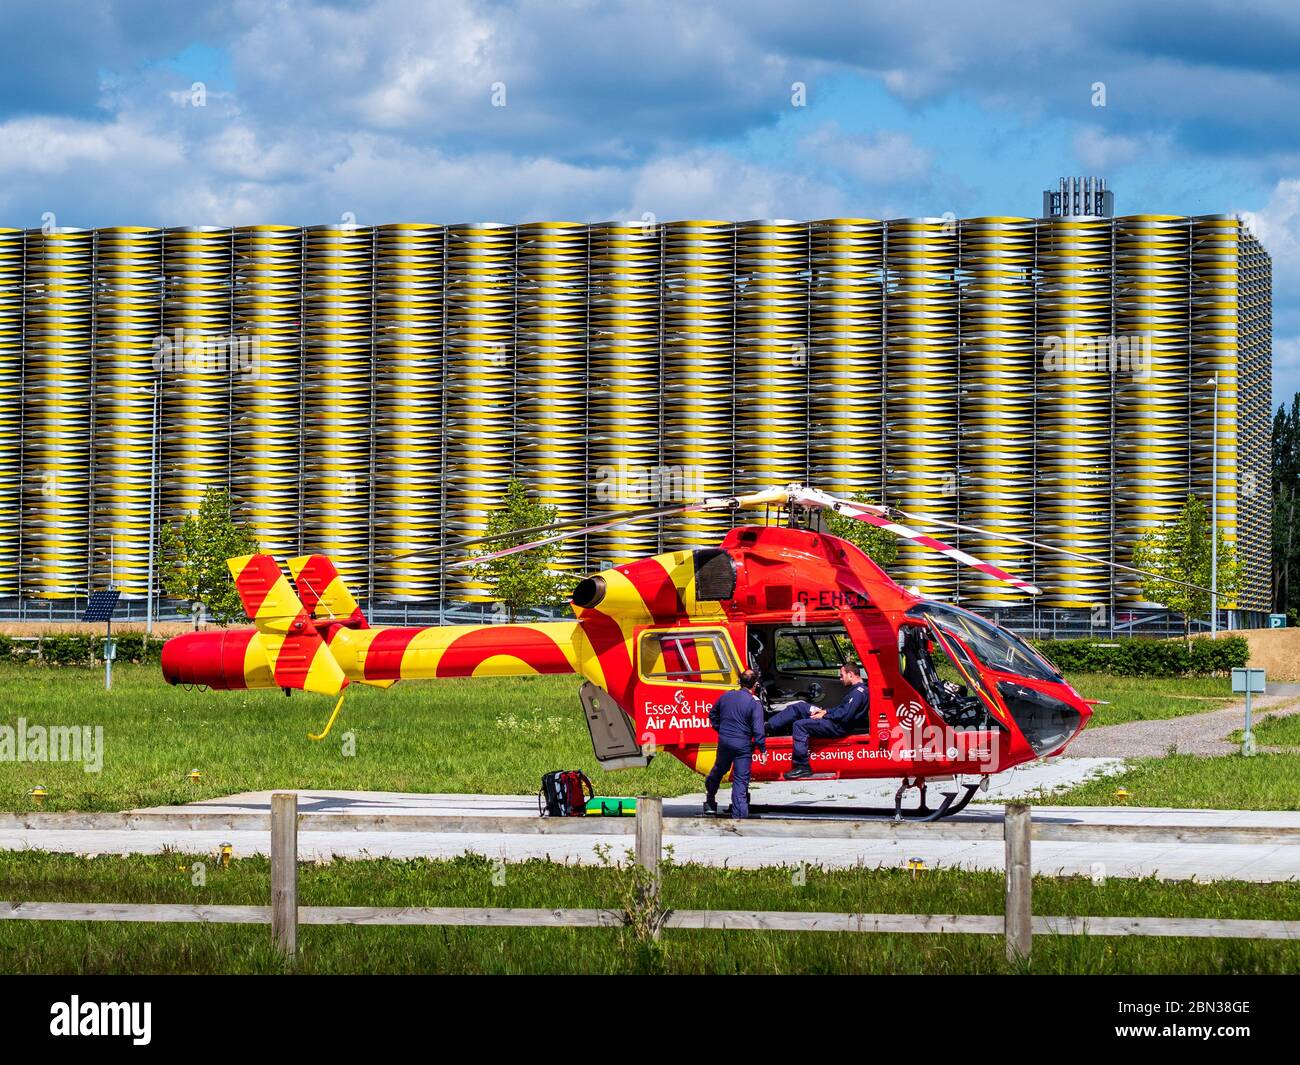 Hubschrauber Ambulance Cambridge. Die Essex & Herts Air Ambulance wartet am Cambridge Addebrookes Hospital Helipad. McDonnell Douglas MD902 Explorer. Stockfoto